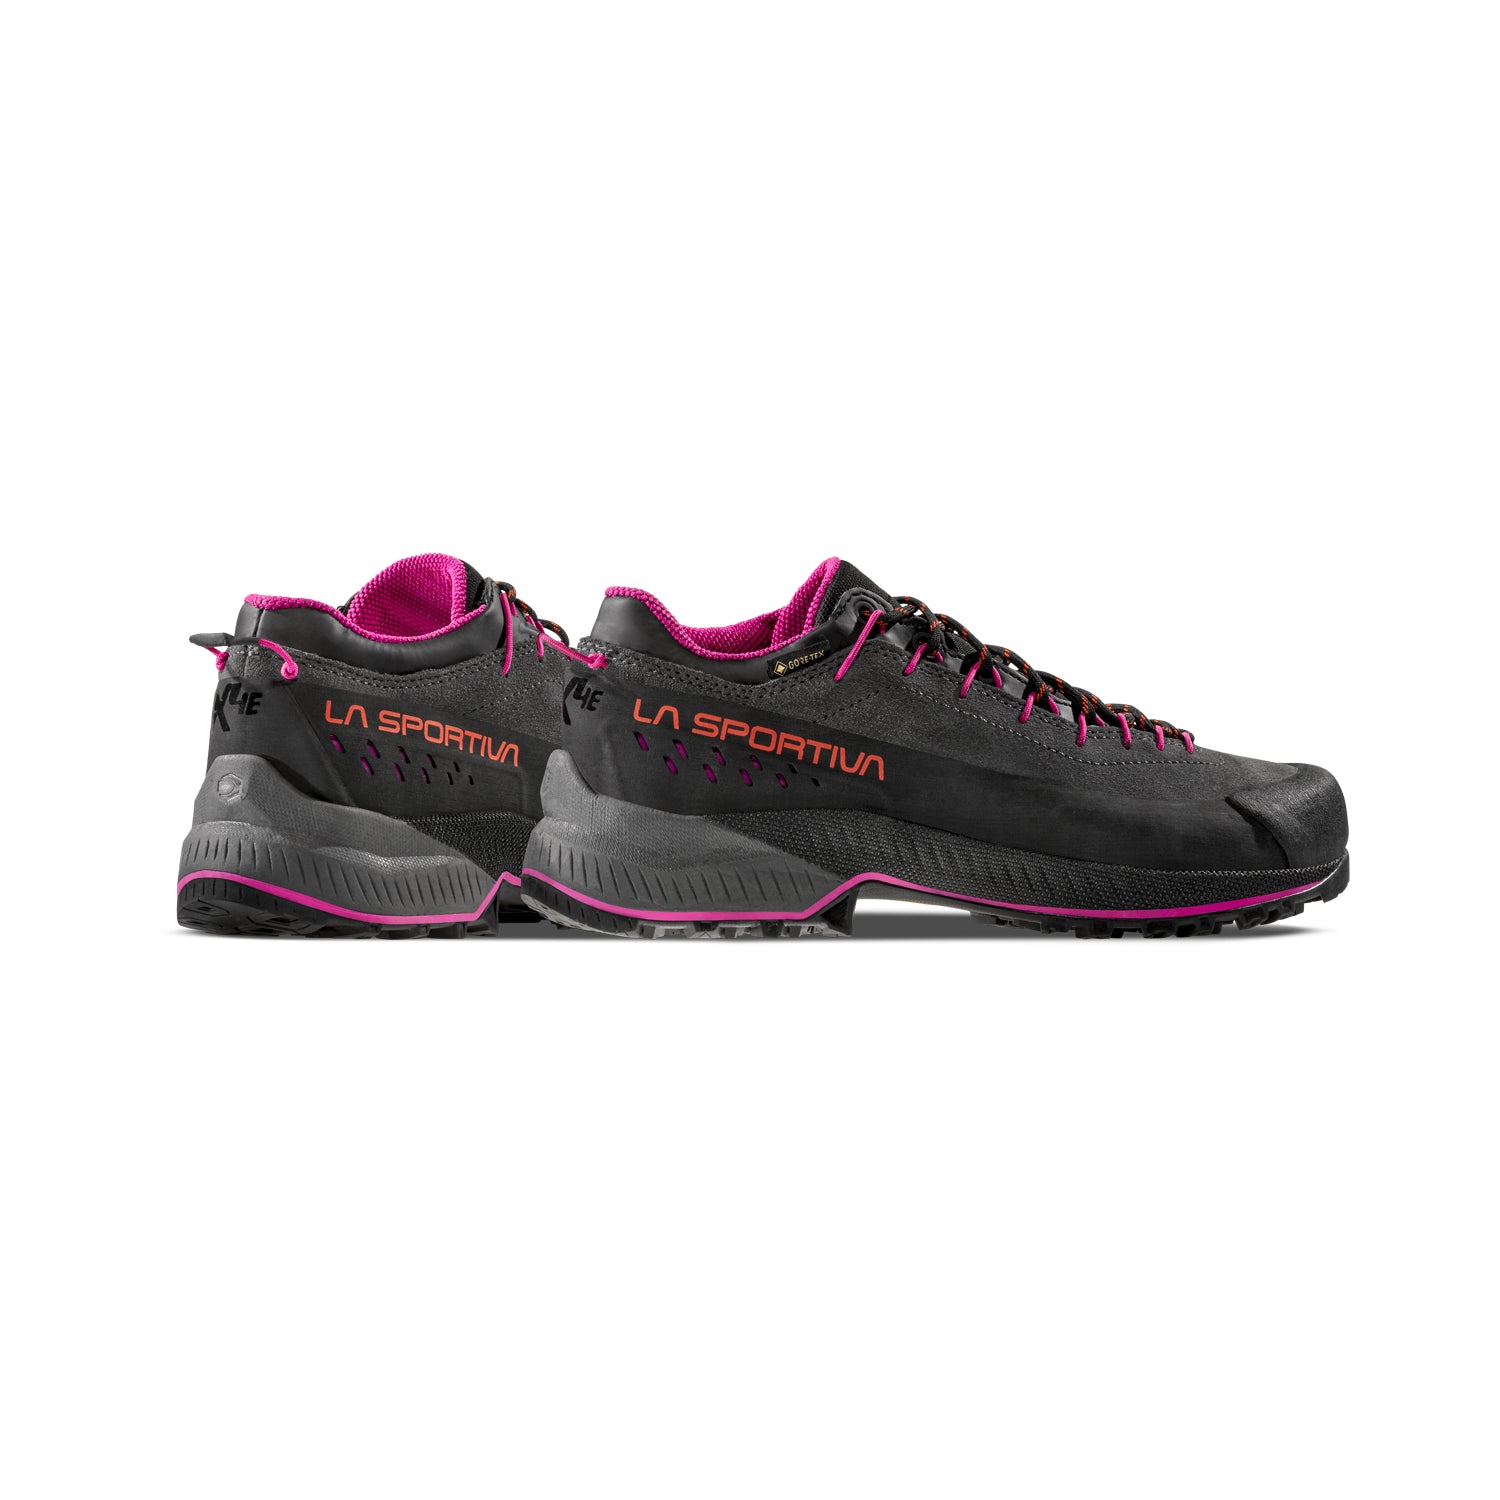 La Sportiva TX4 Evo GTX - Womens approach shoes in carbon springtime colour